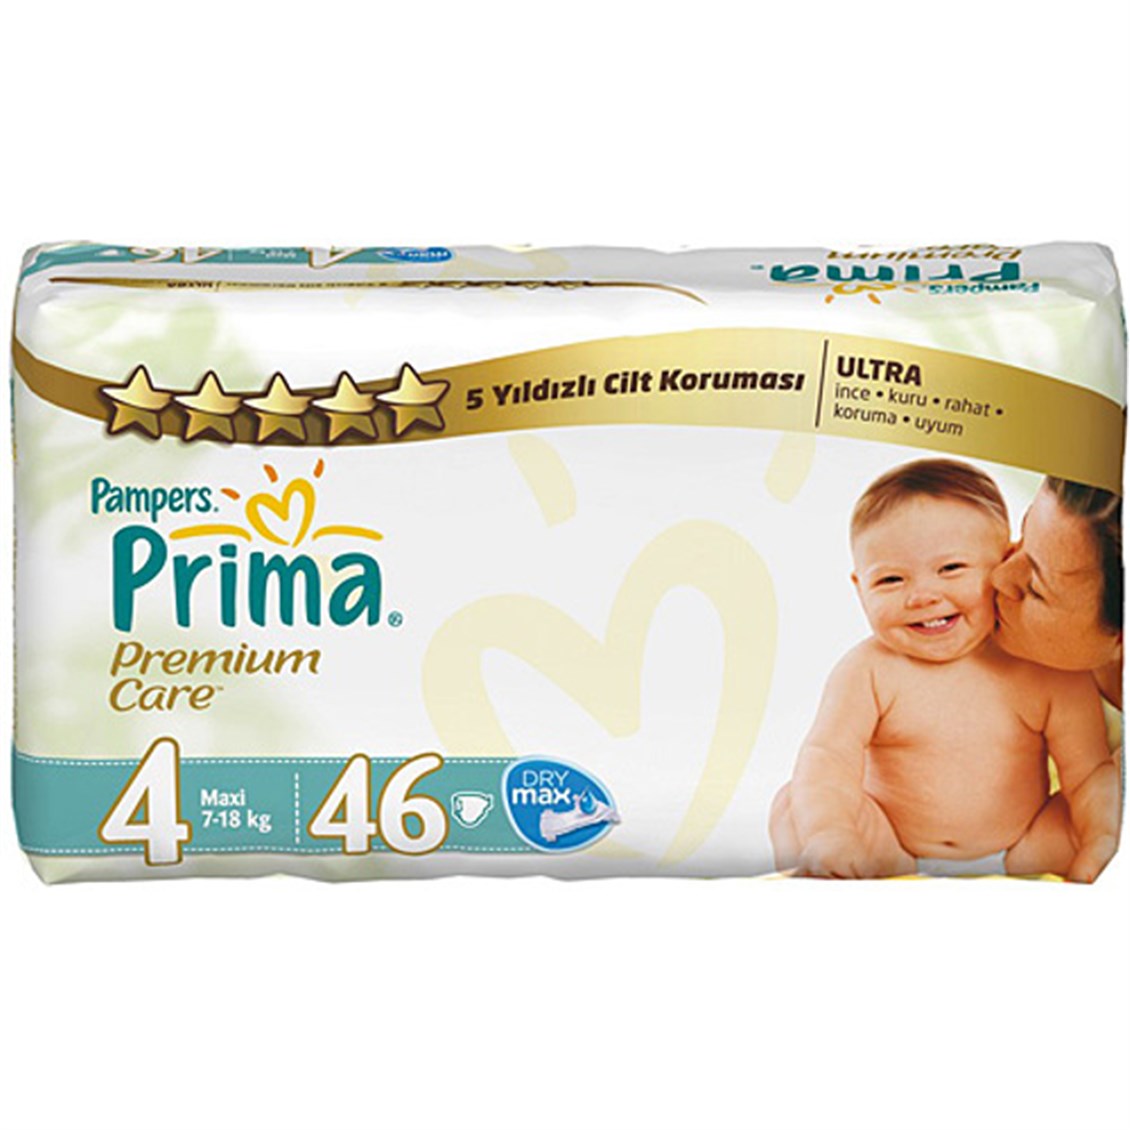 Prima Premium Care 4 Numara Maxi 46'lı Bebek Bezi - Onur Market